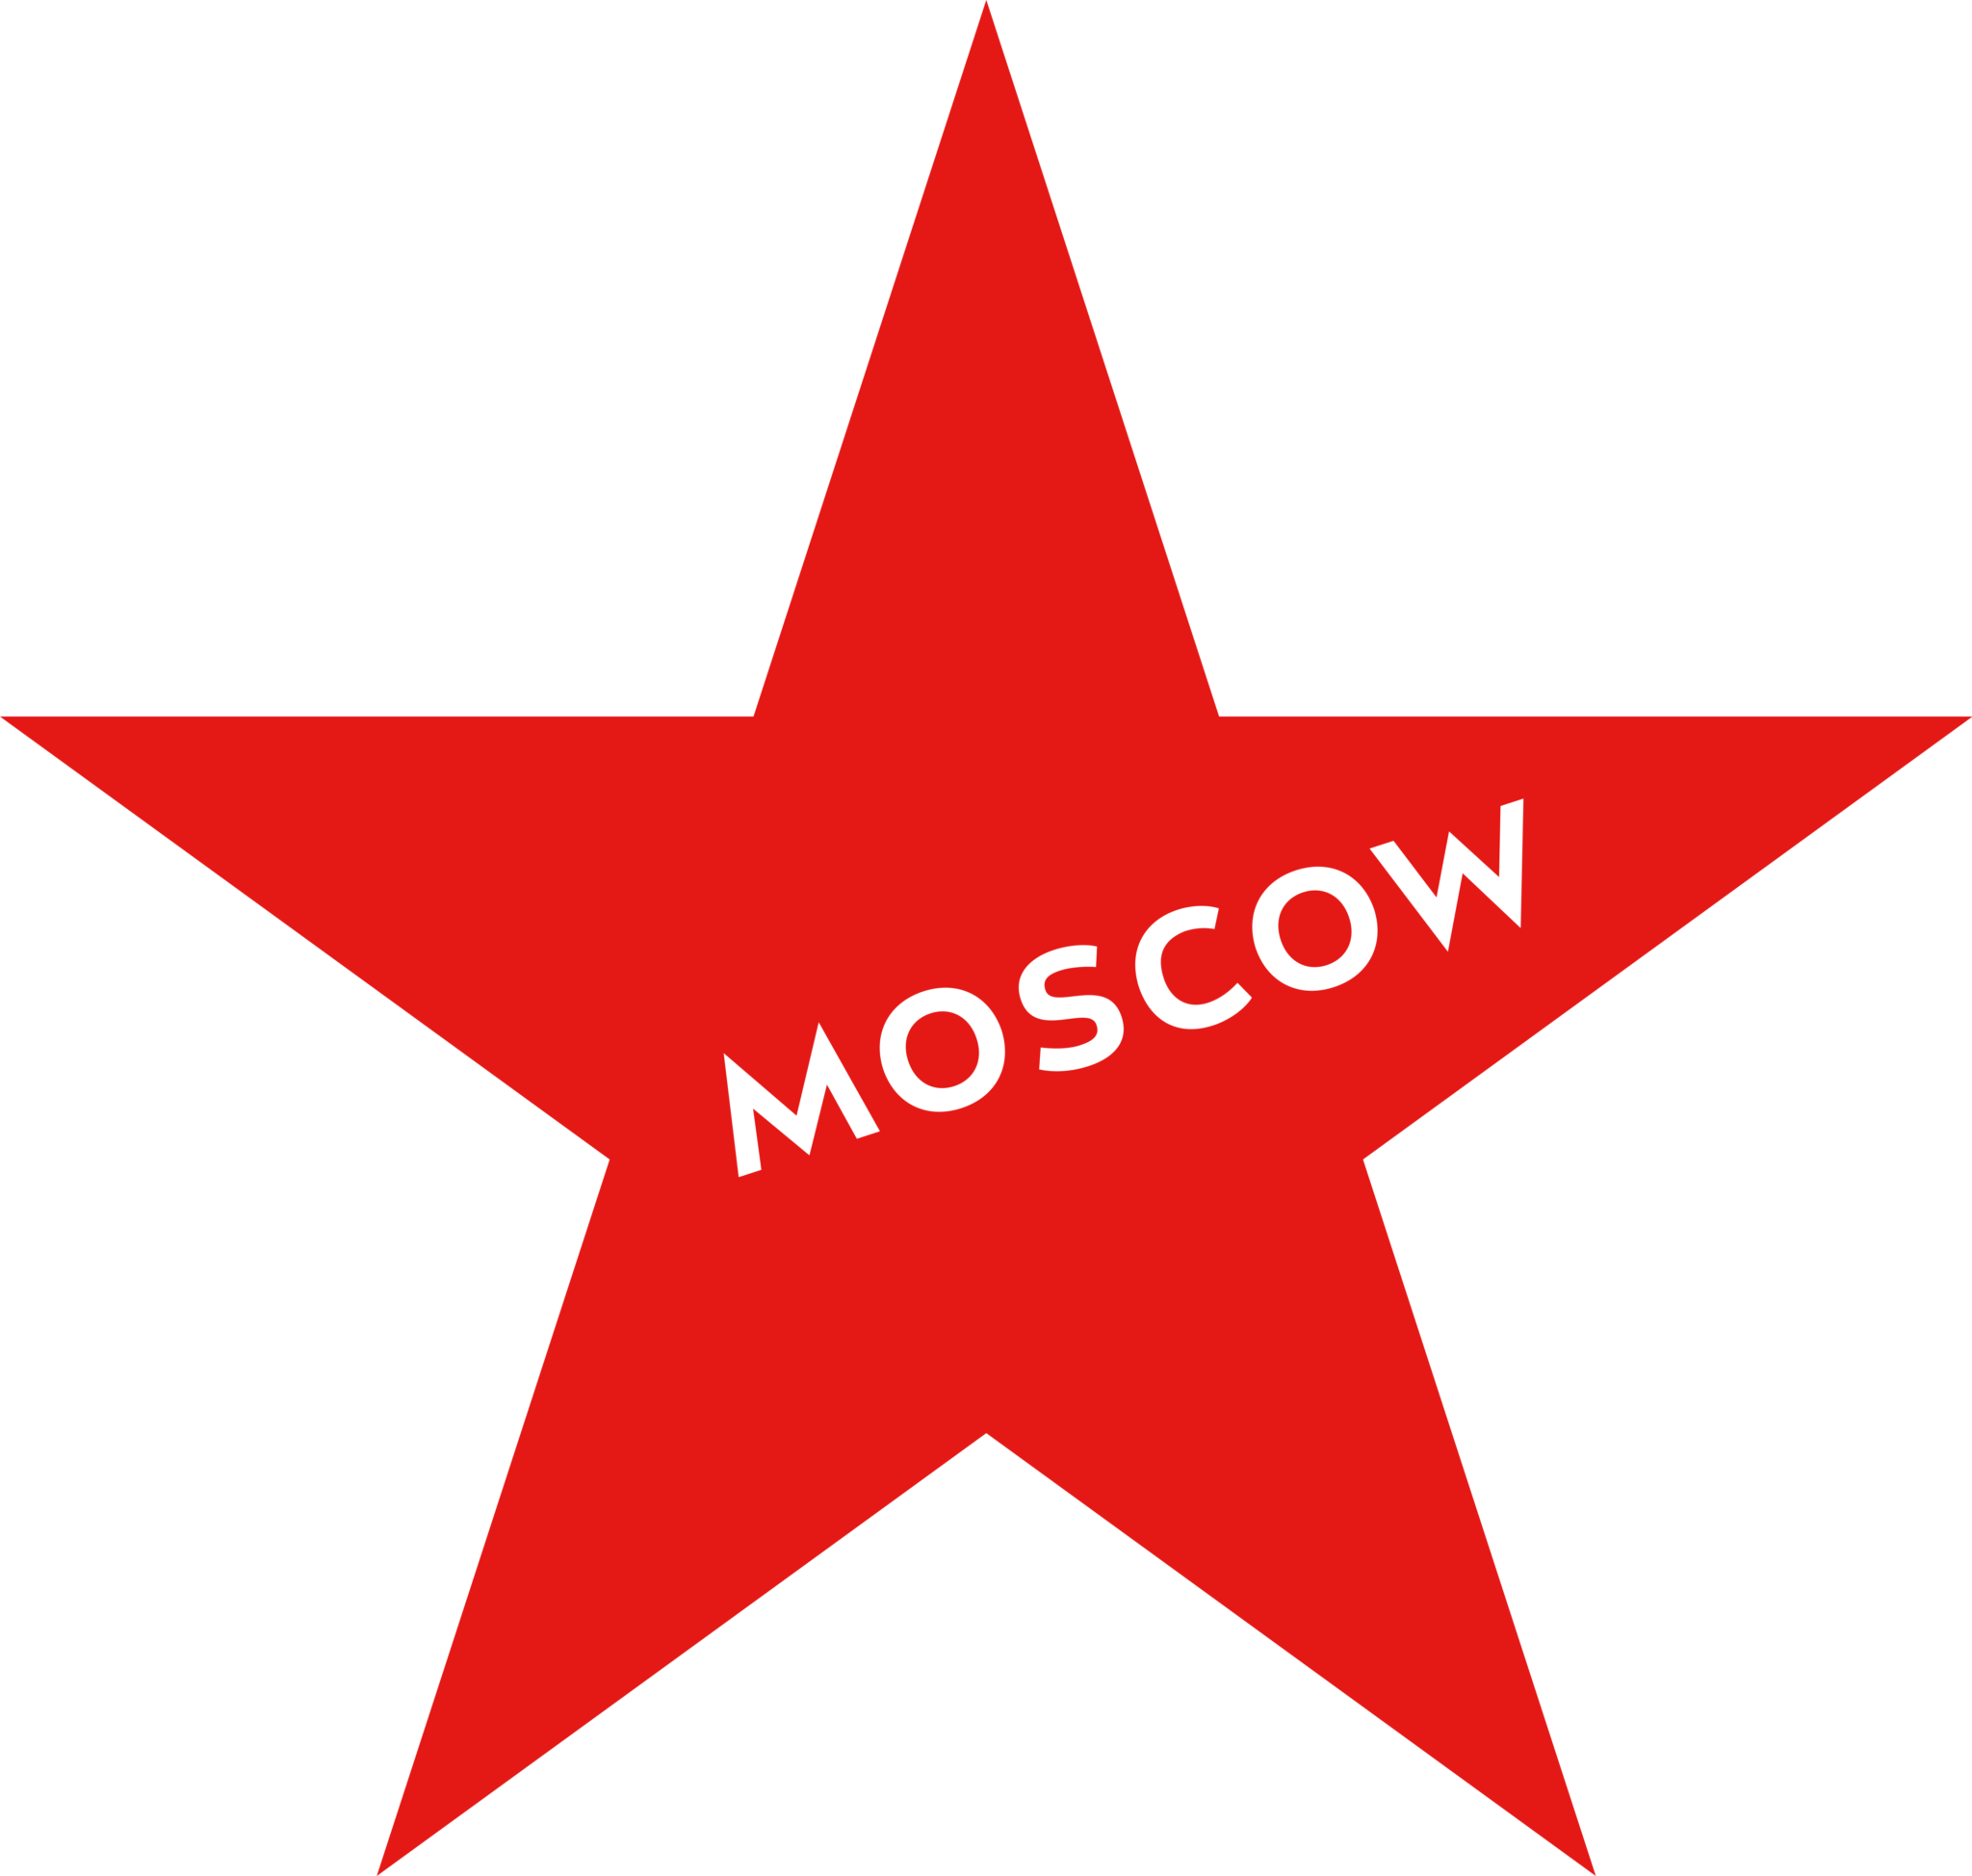 Moscow star. Москва логотип. Эмблема звезда. Москва надпись. Москва логотип звезда.